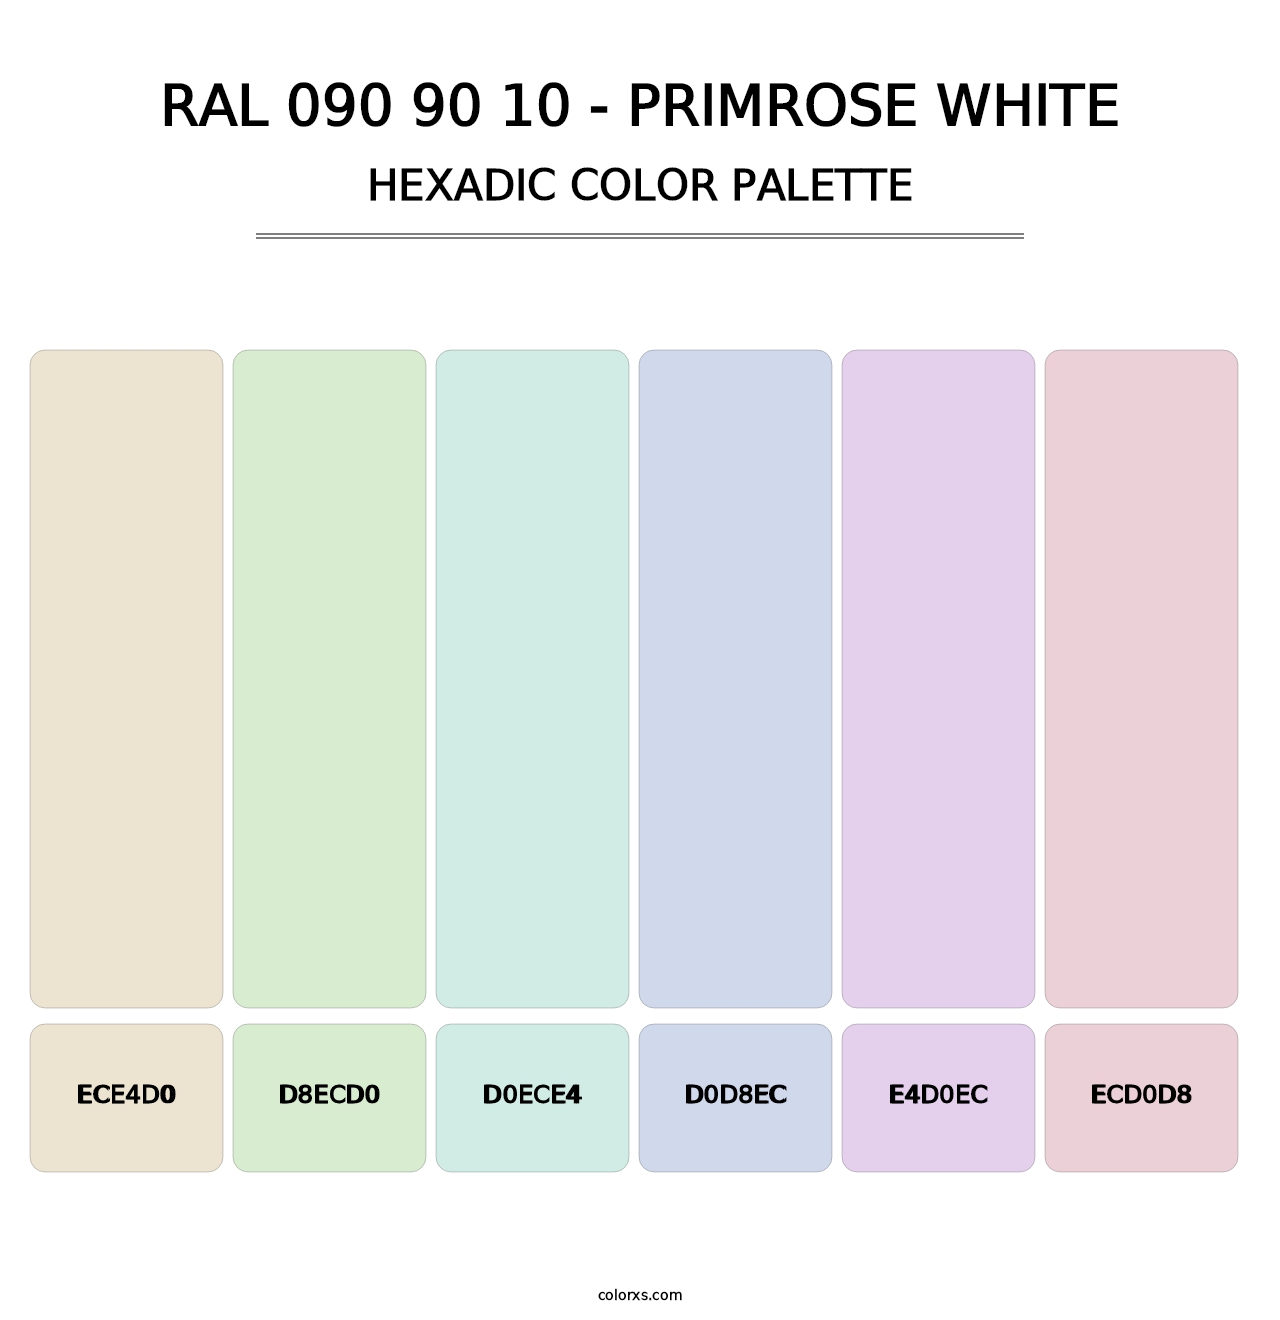 RAL 090 90 10 - Primrose White - Hexadic Color Palette